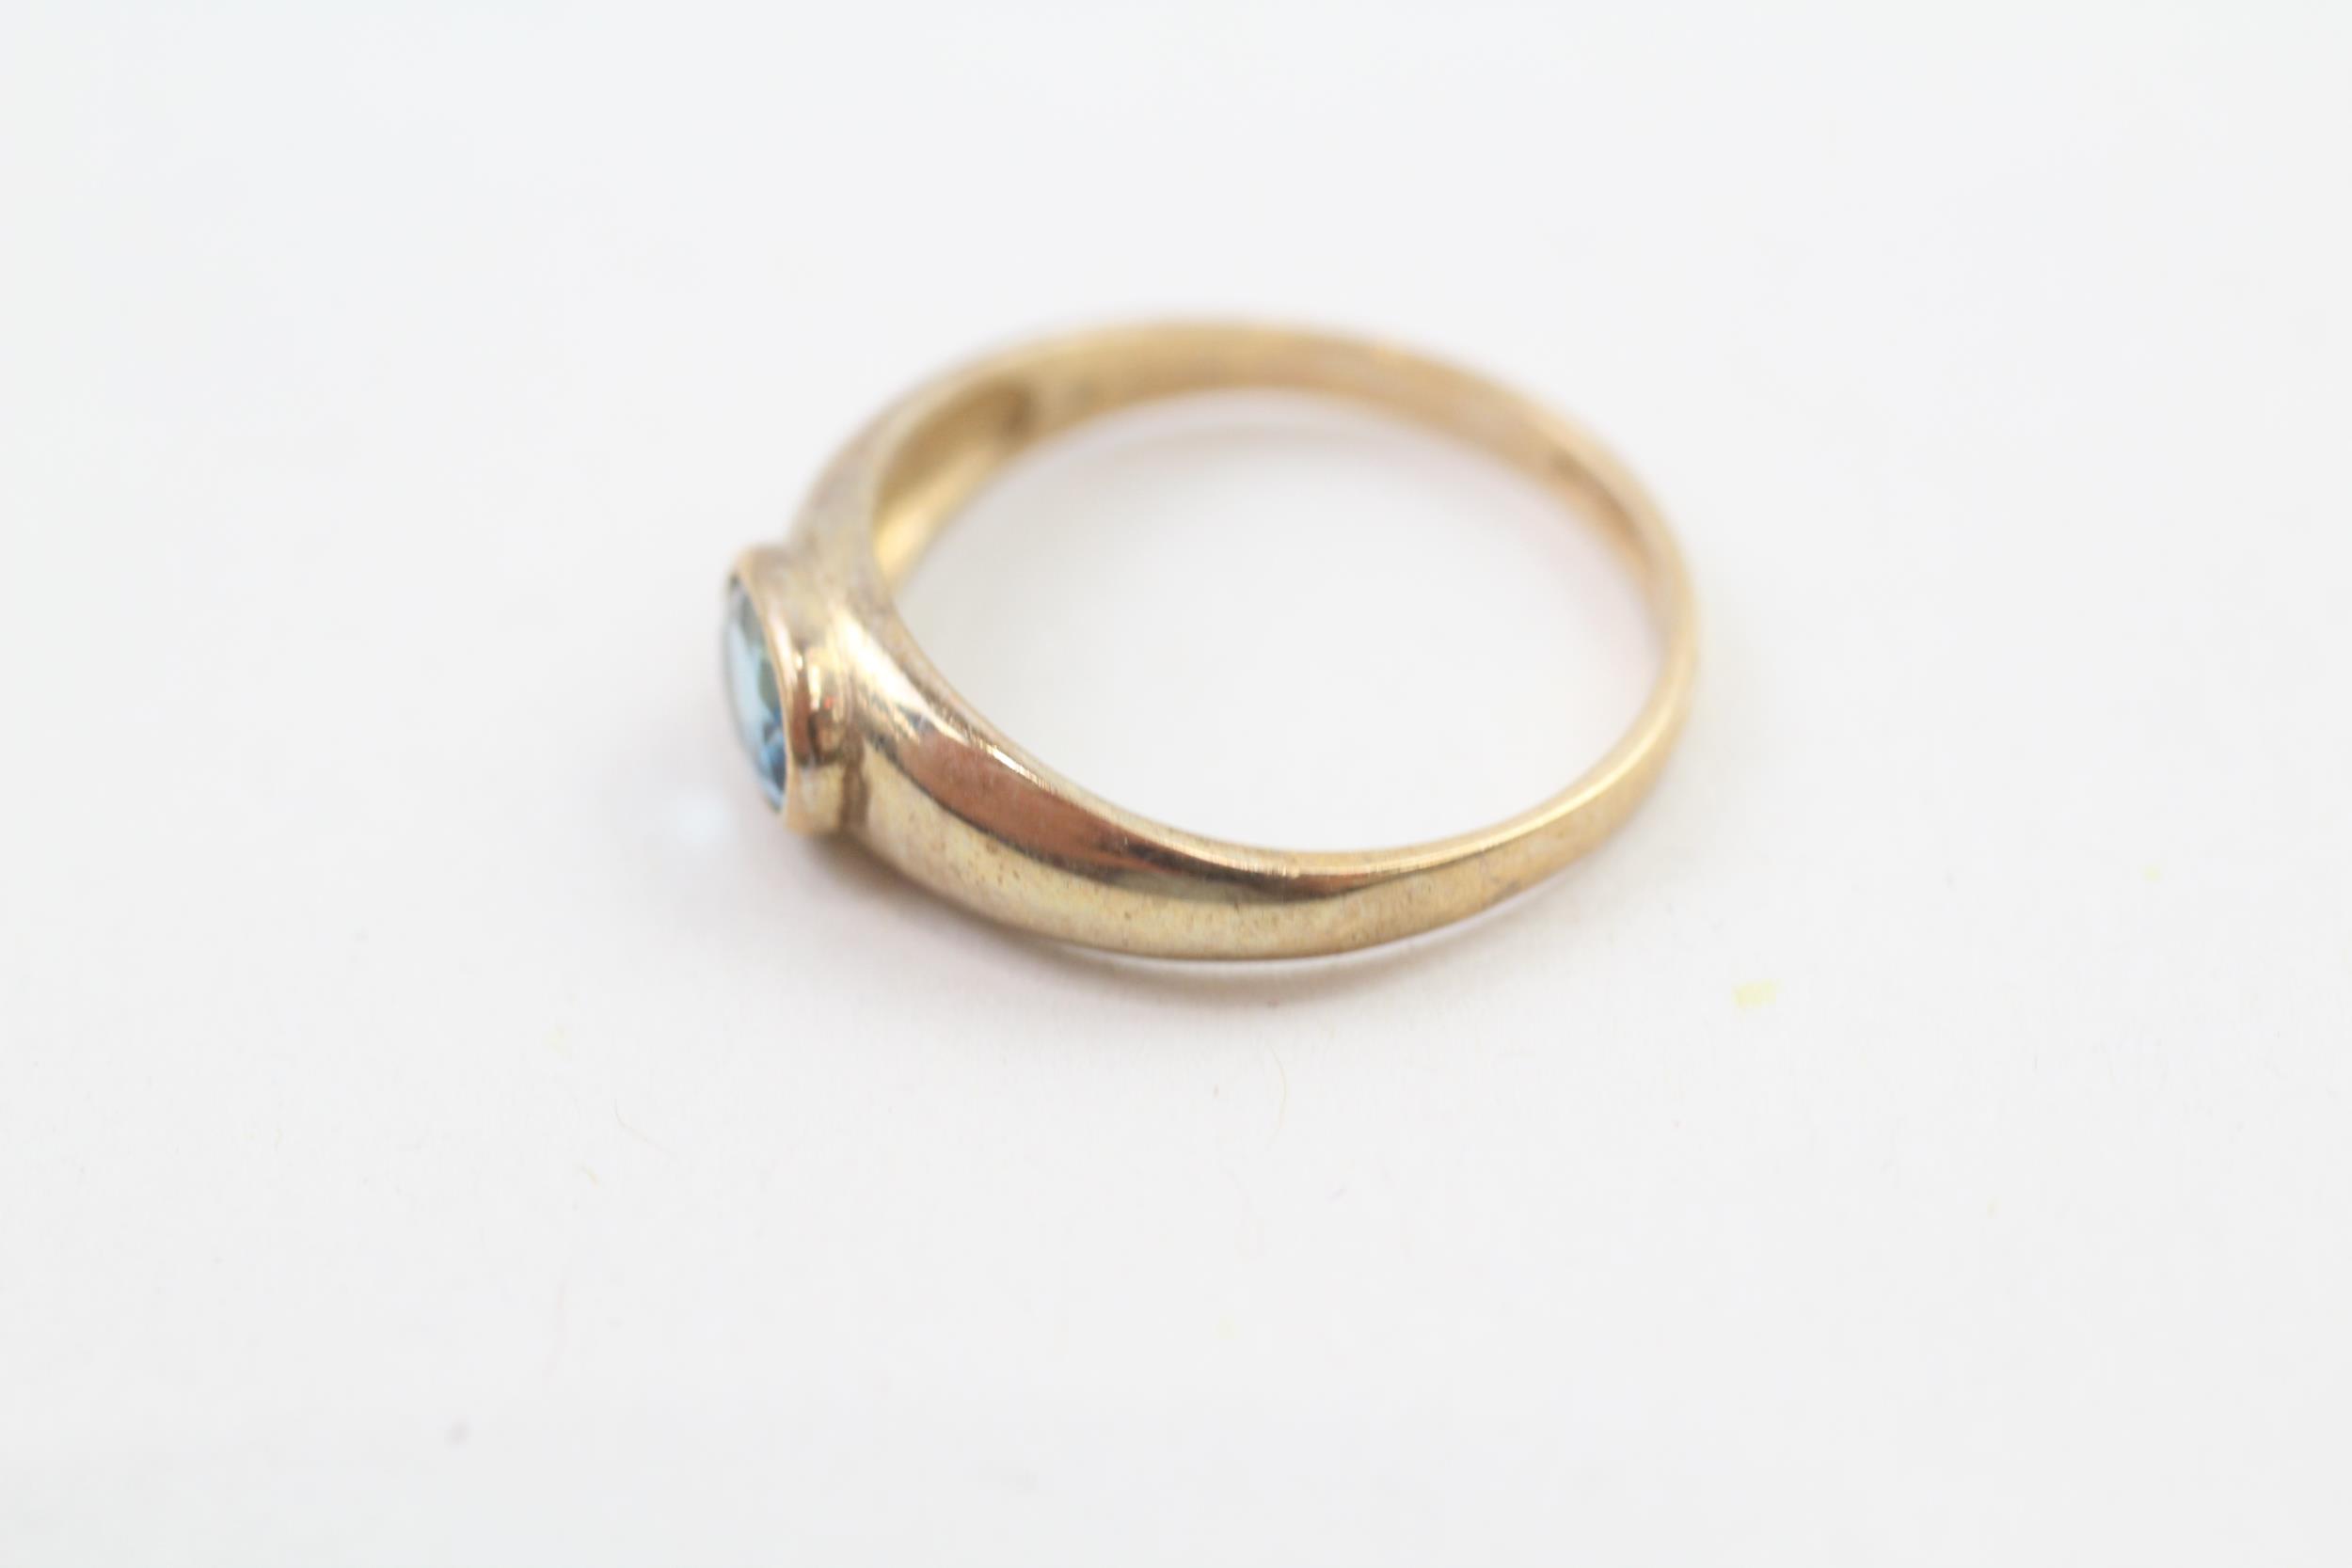 9ct gold oval cut blue topaz ring, bezel set (1.6g) Size L 1/2 - Image 3 of 4